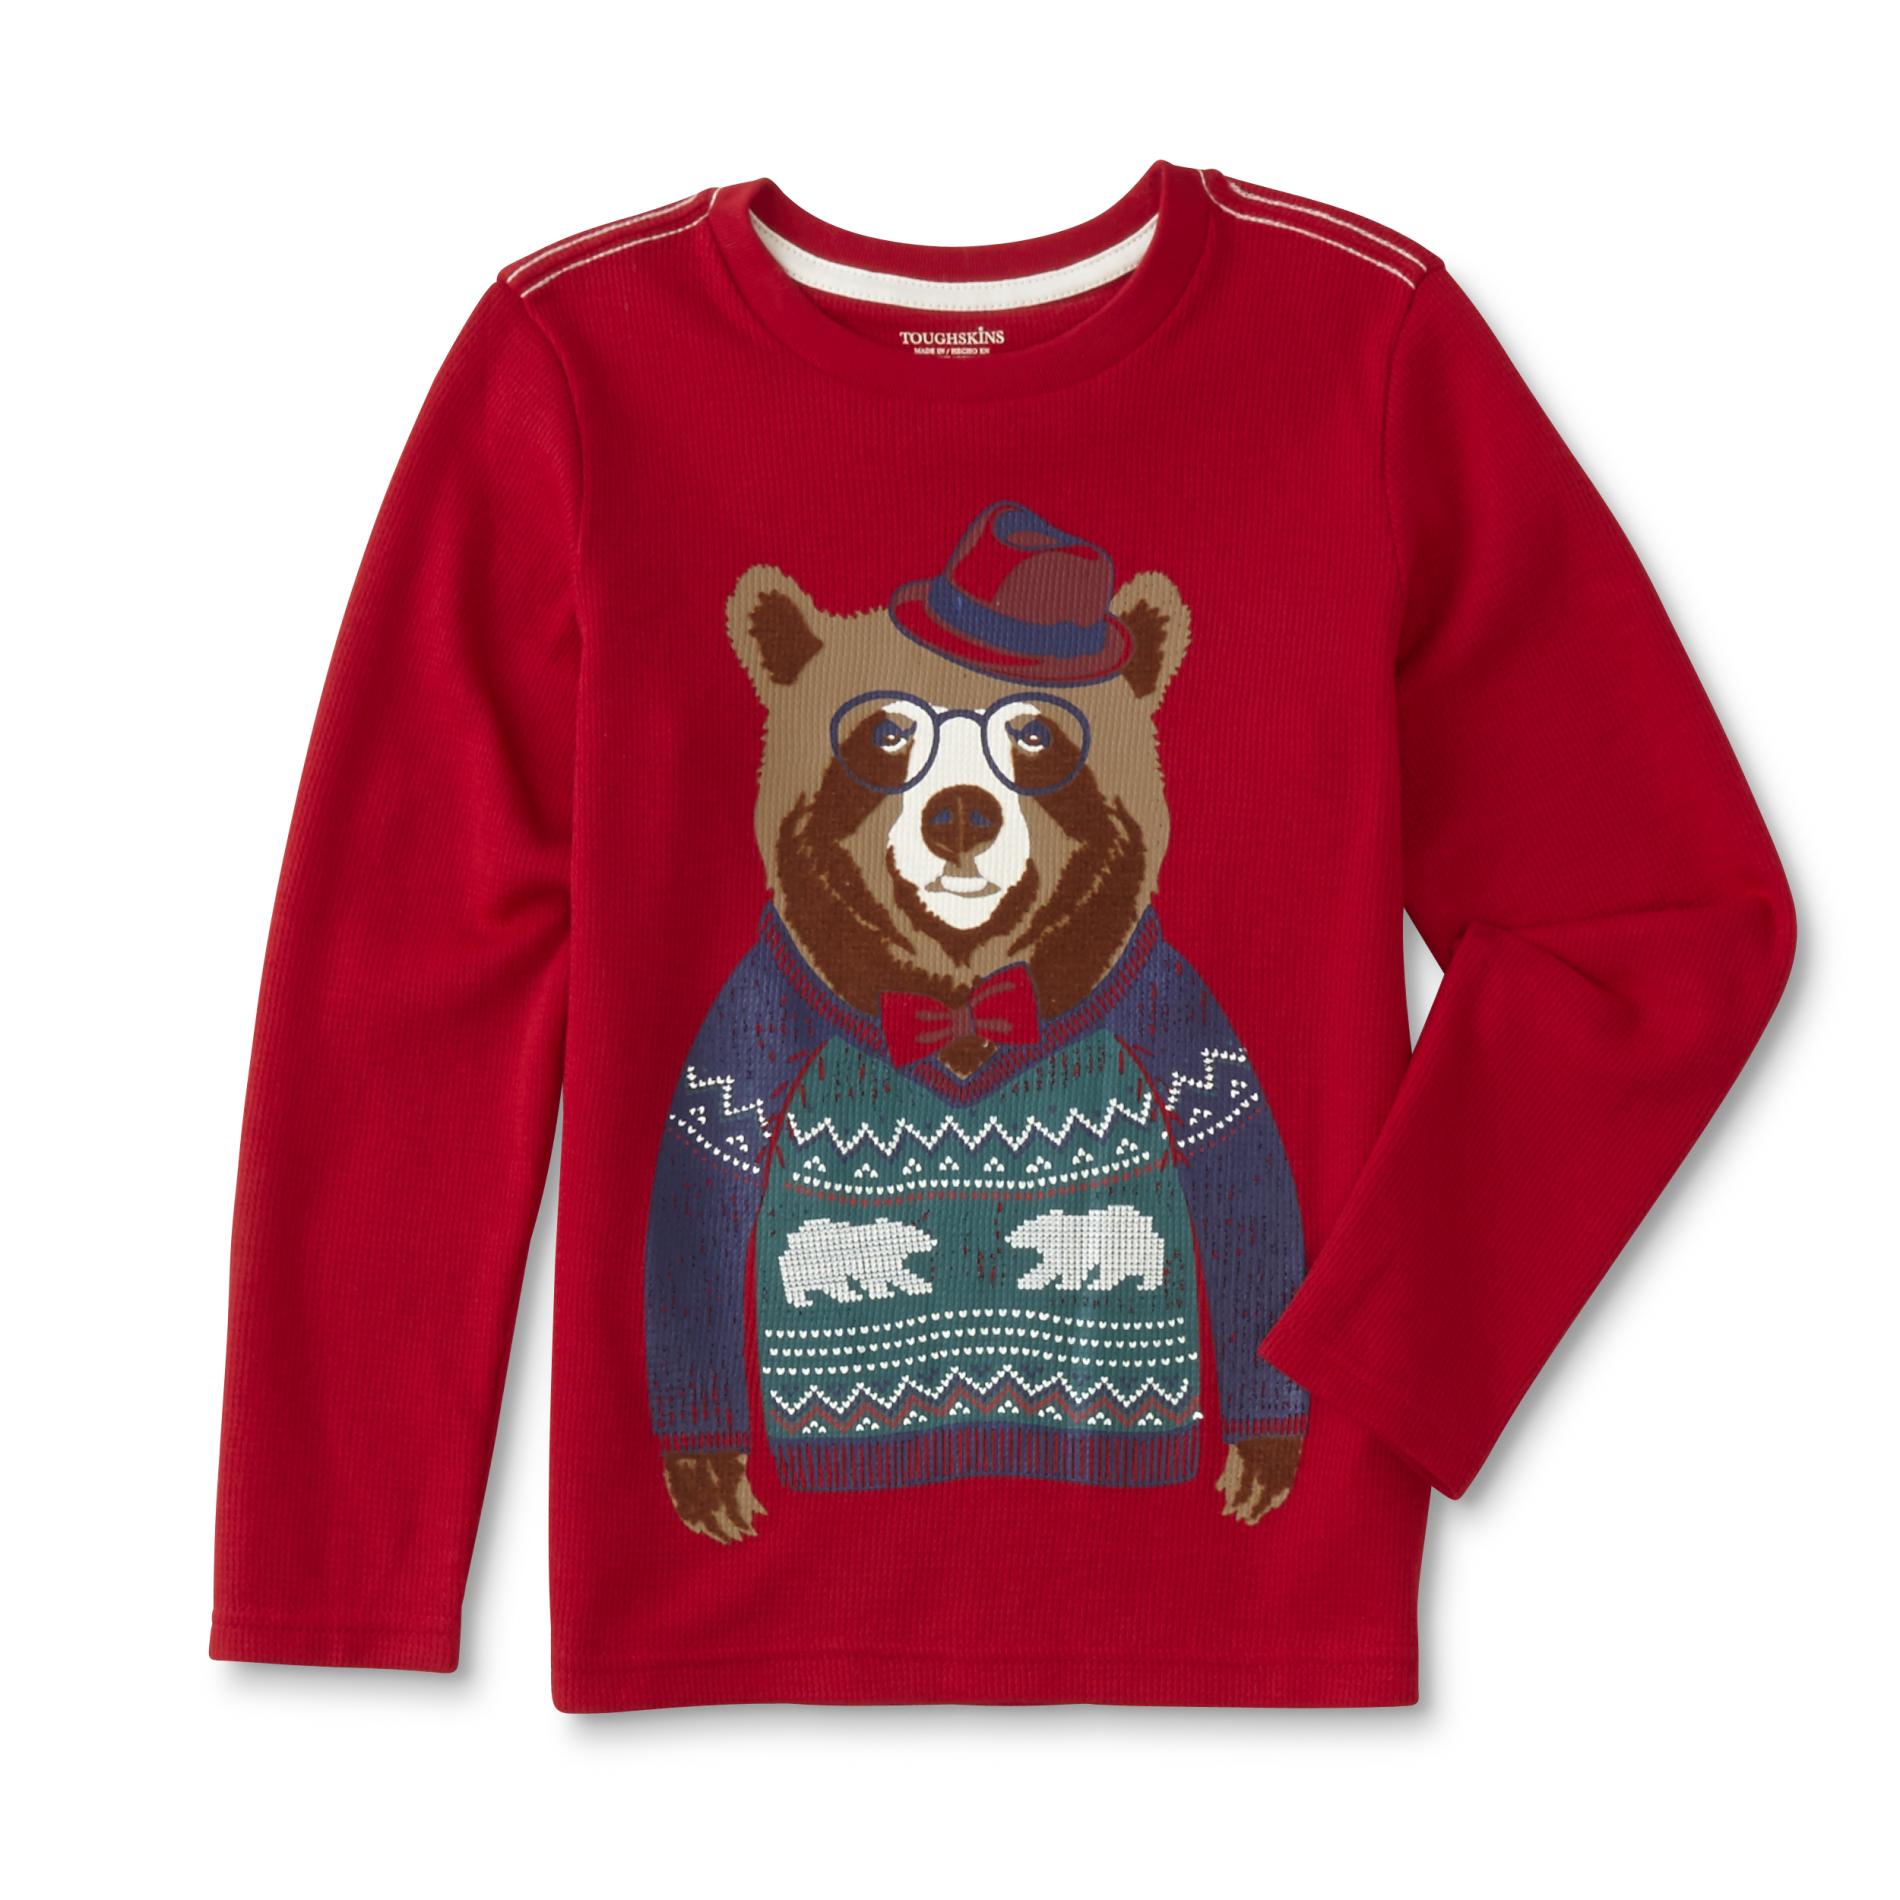 Toughskins Infant & Toddler Boys' Thermal Graphic T-Shirt - Bear